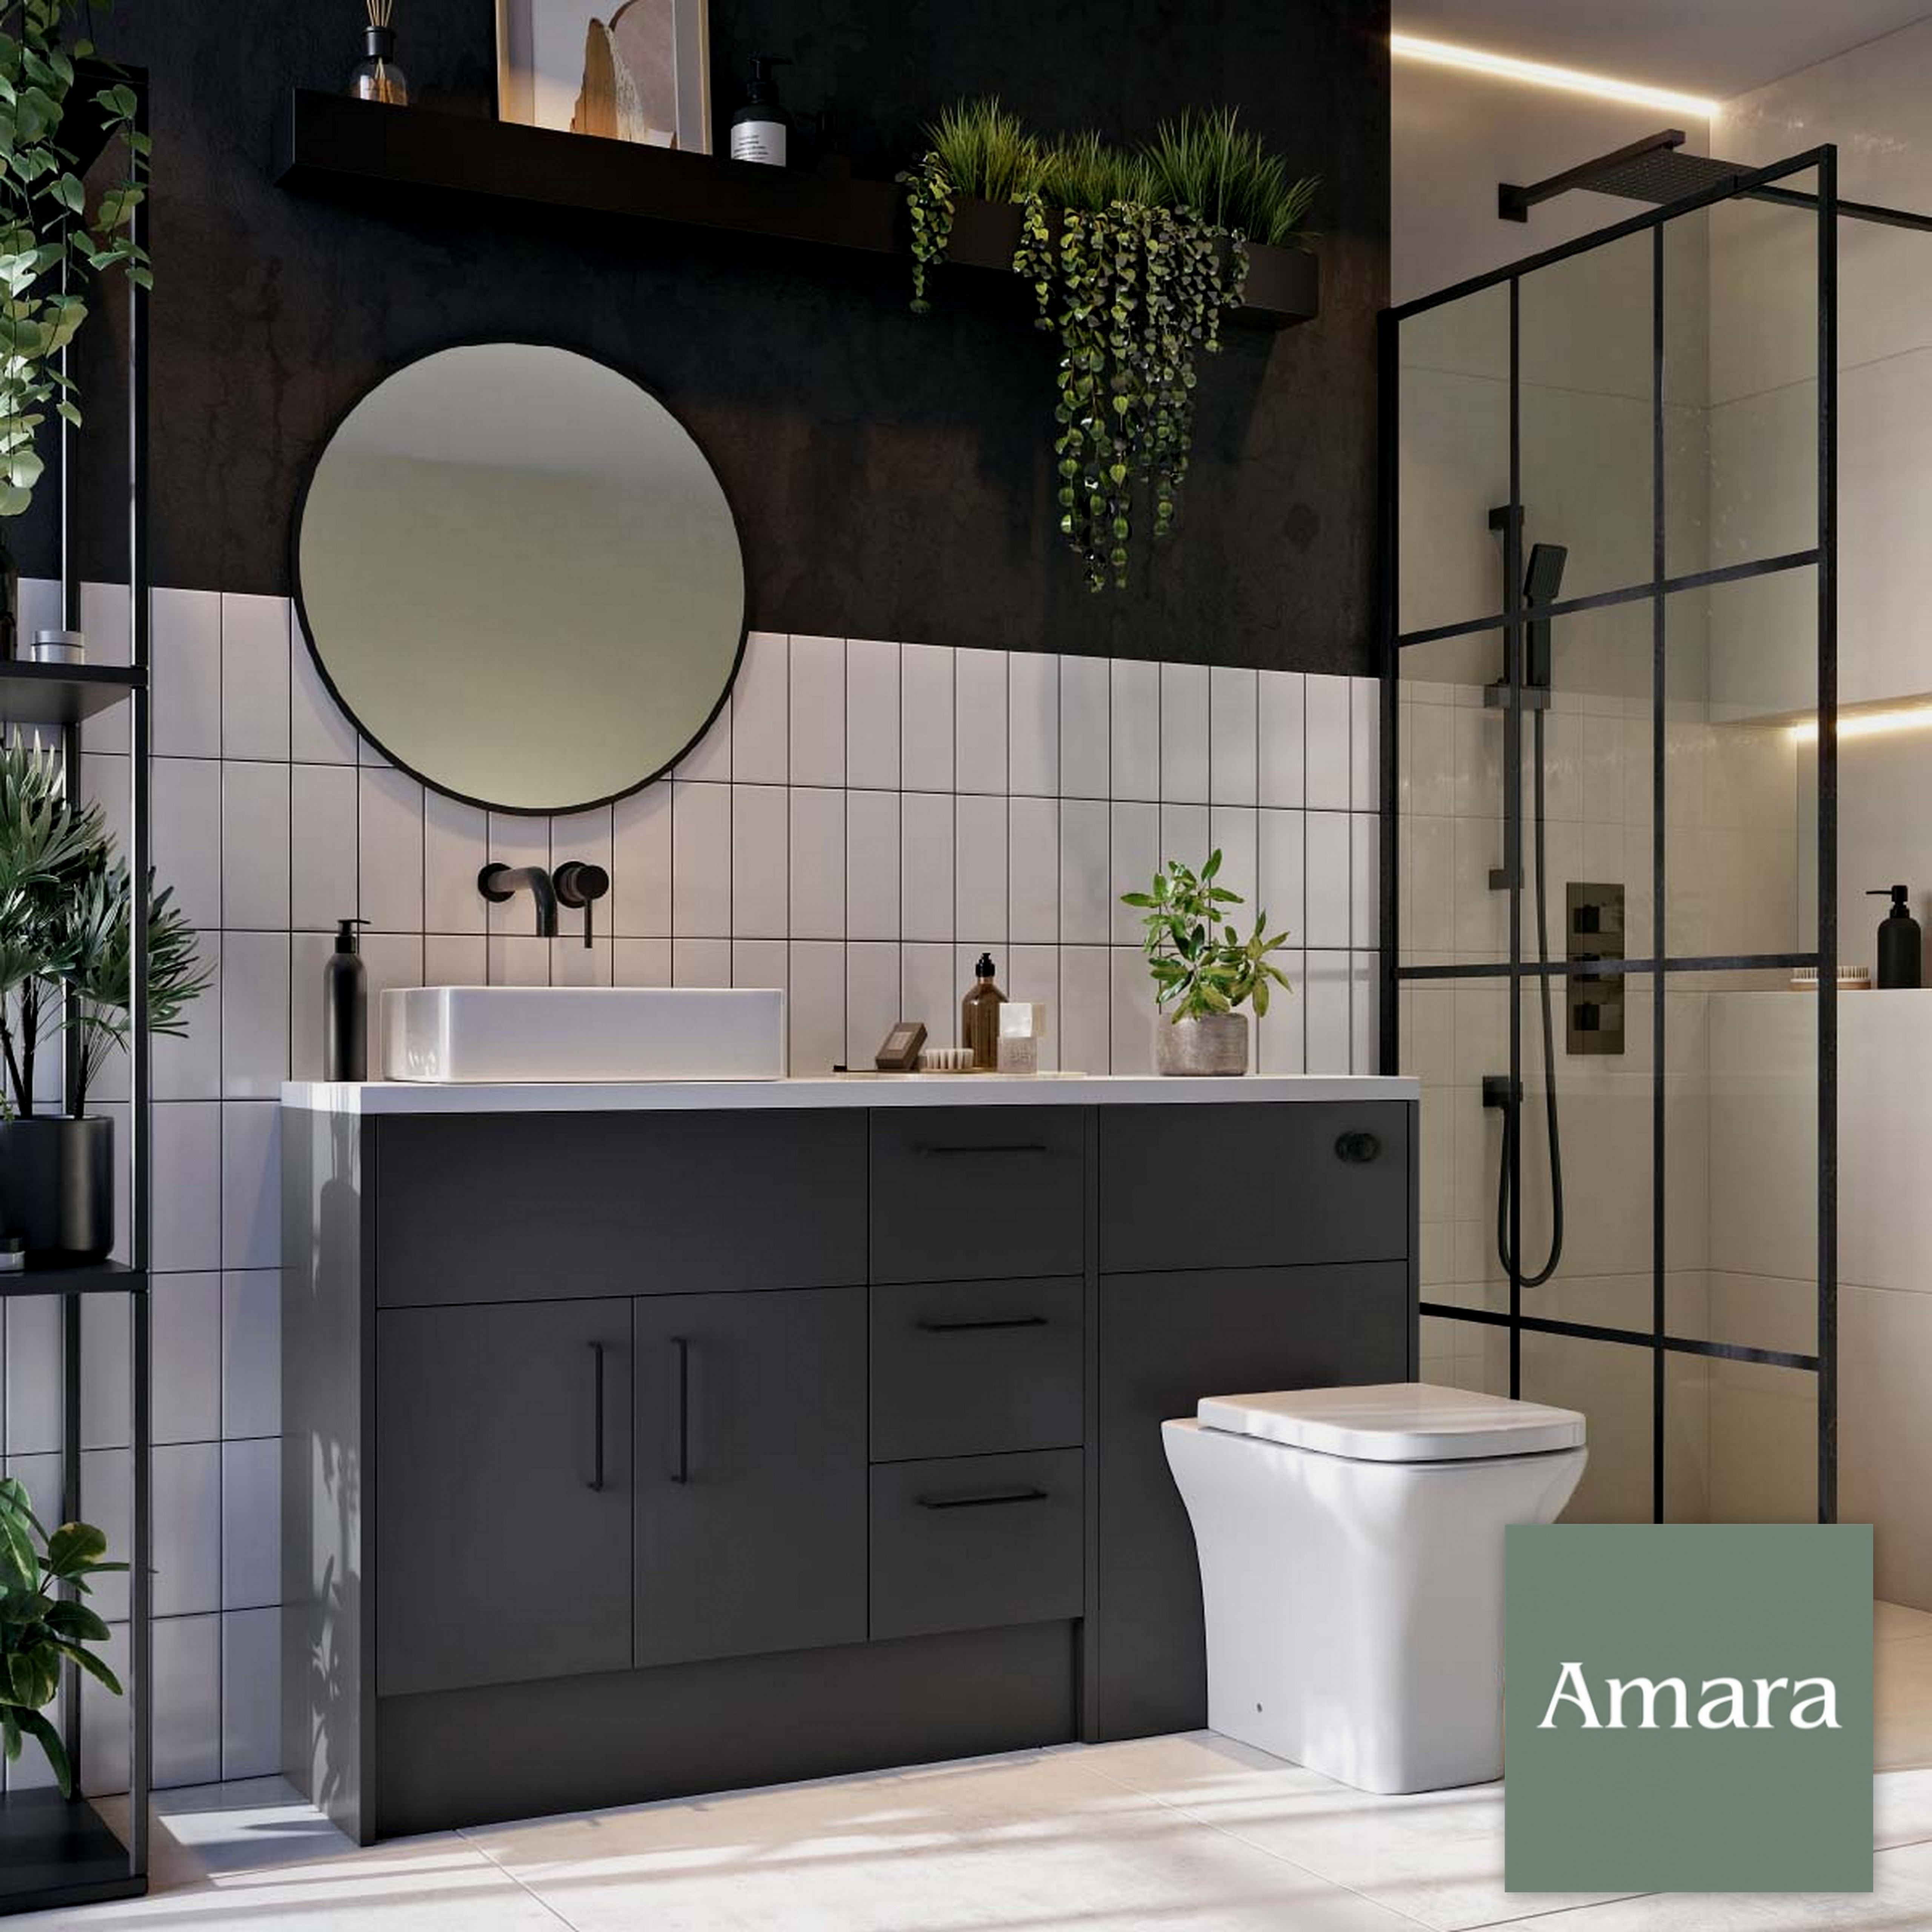 Amara Bathrooms